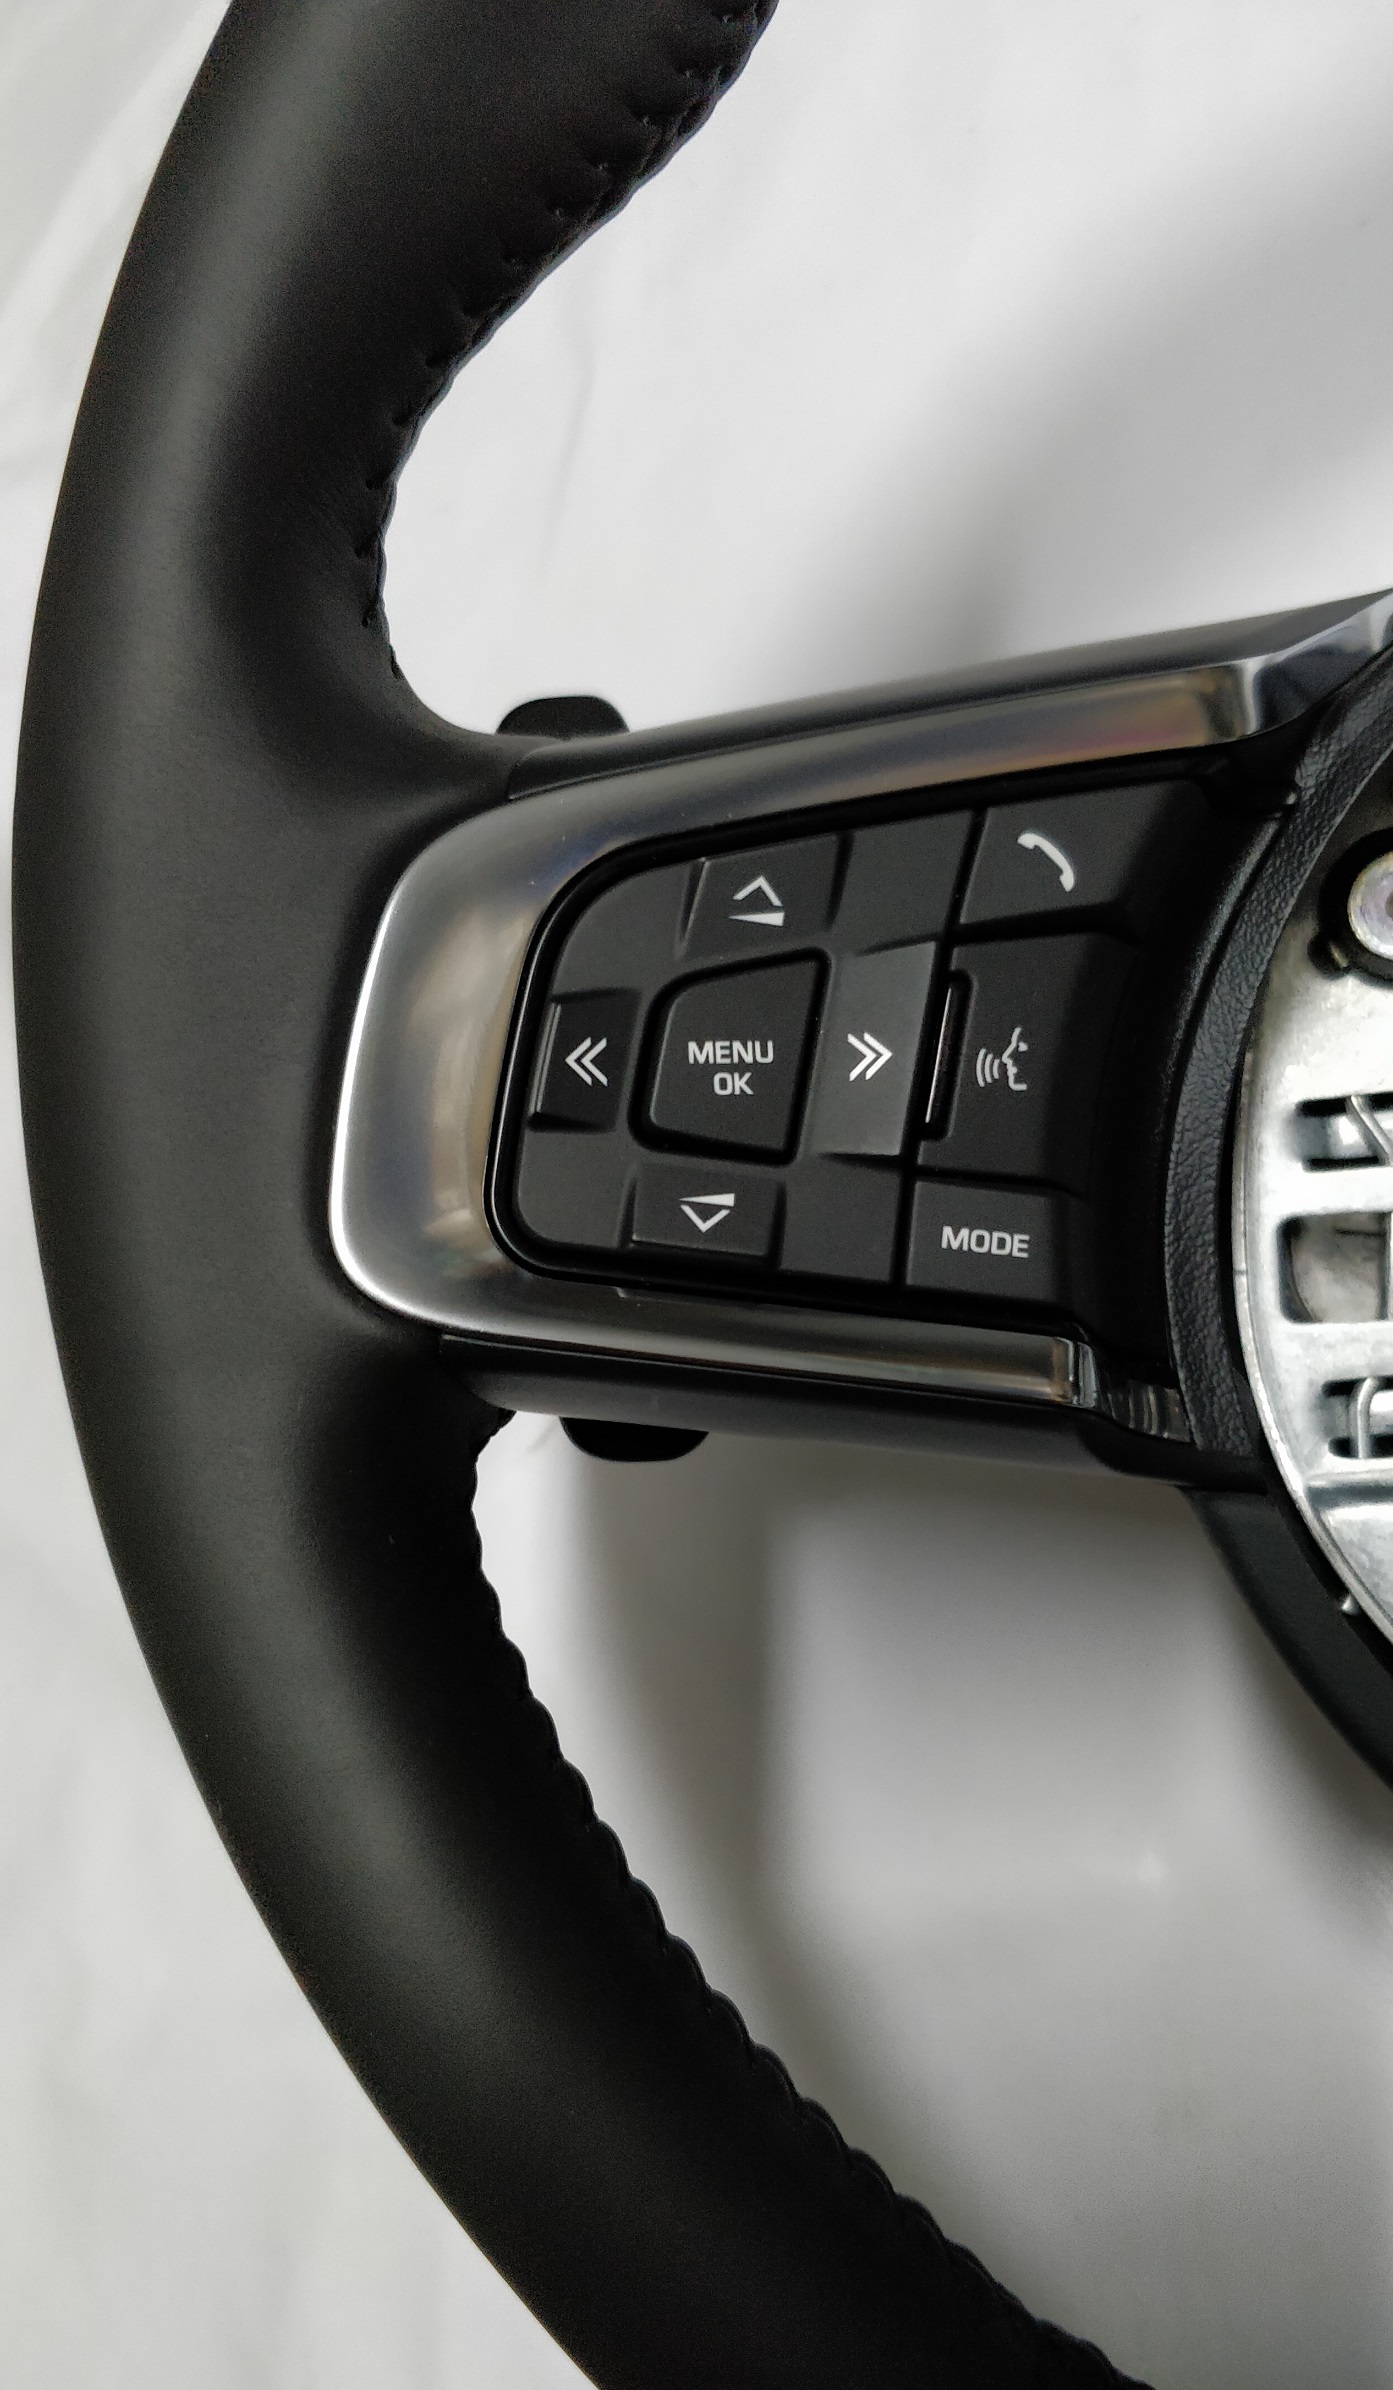 Jaguar XE steering wheel heated GX7M-3F563 Sport paddles 2015+